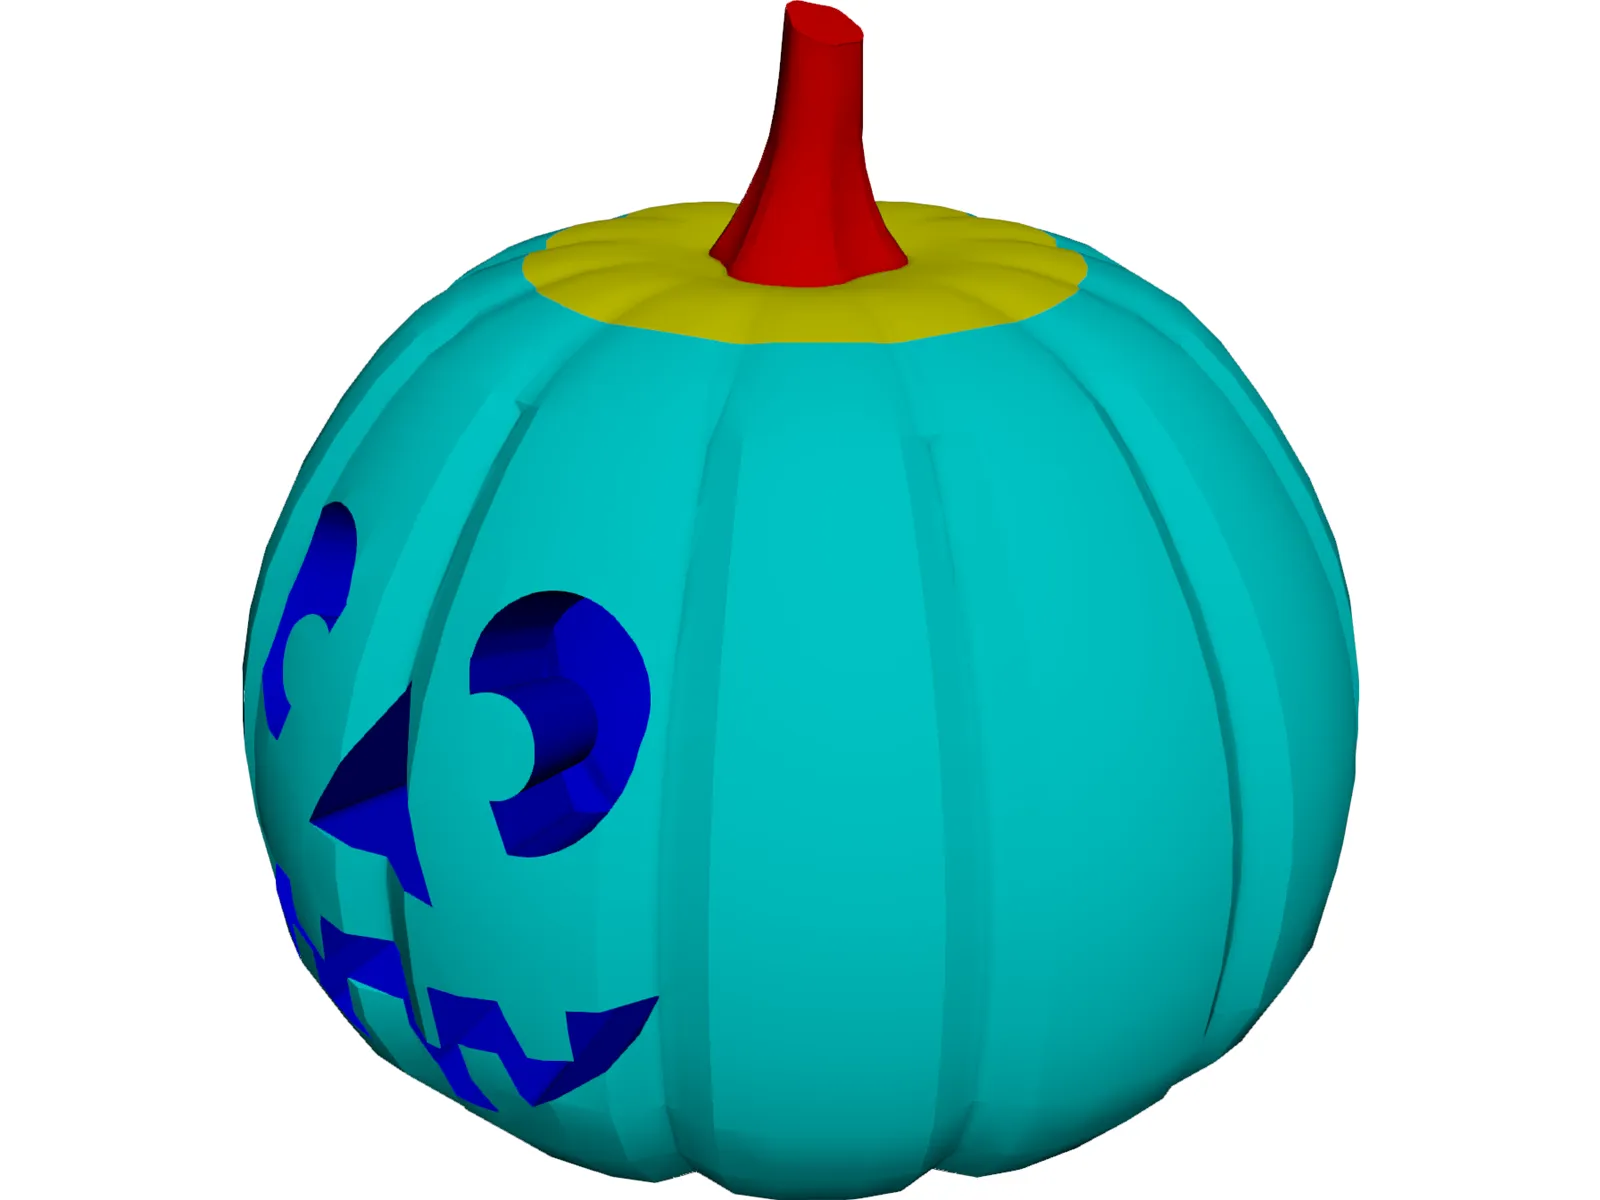 Jack-o-Lantern 3D Model